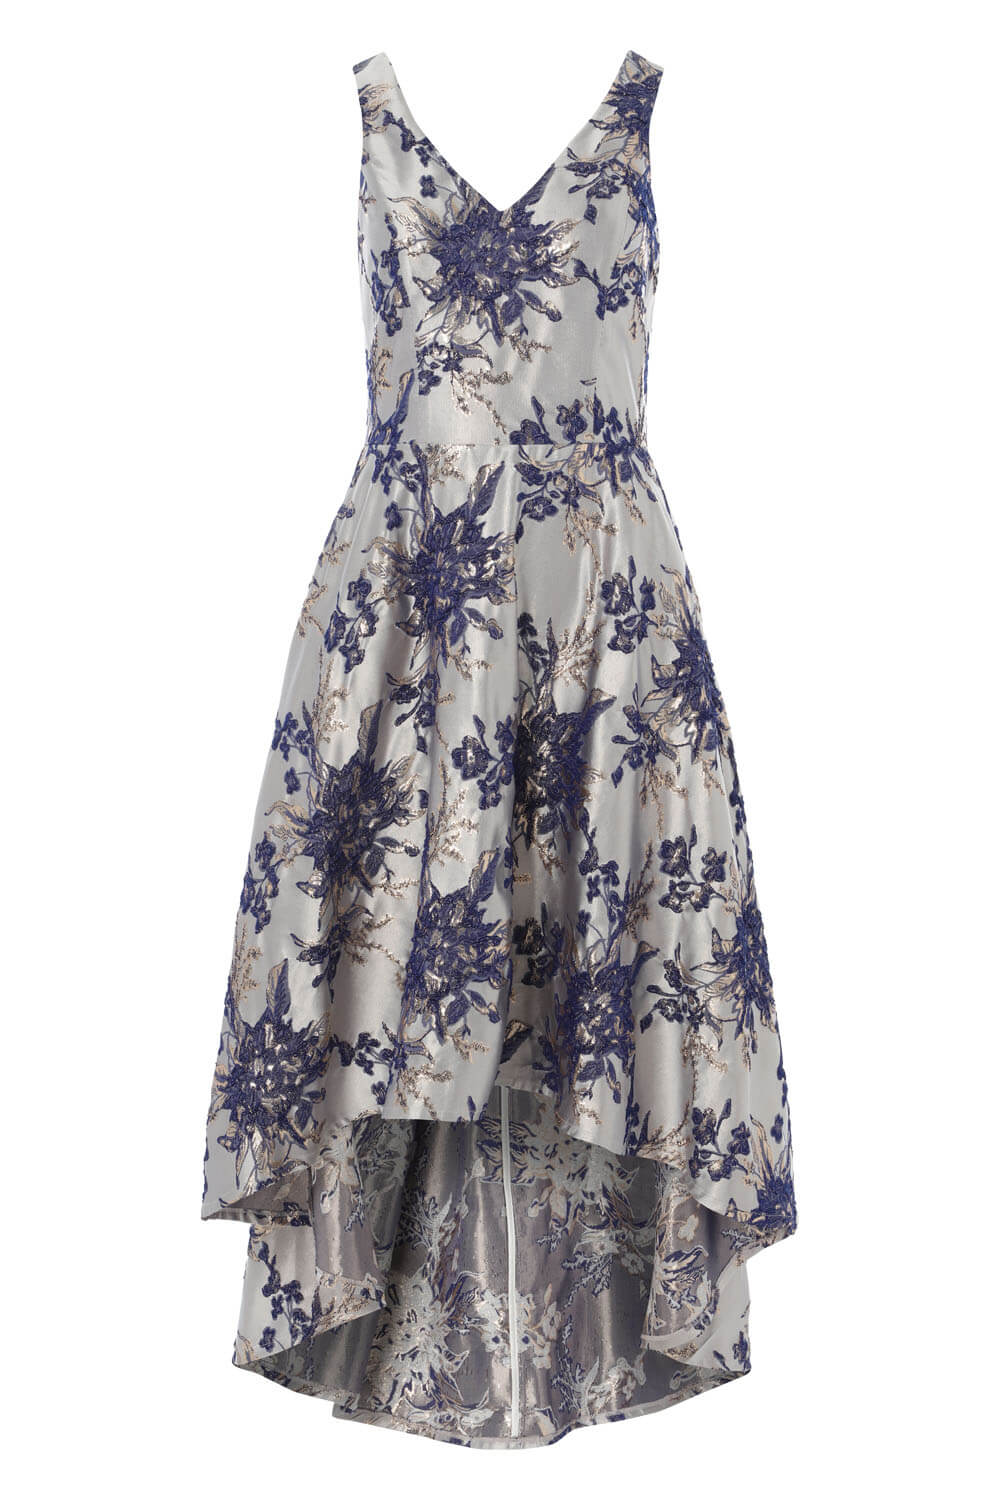 Floral Jacquard Gown Dress in Royal Blue - Roman Originals UK